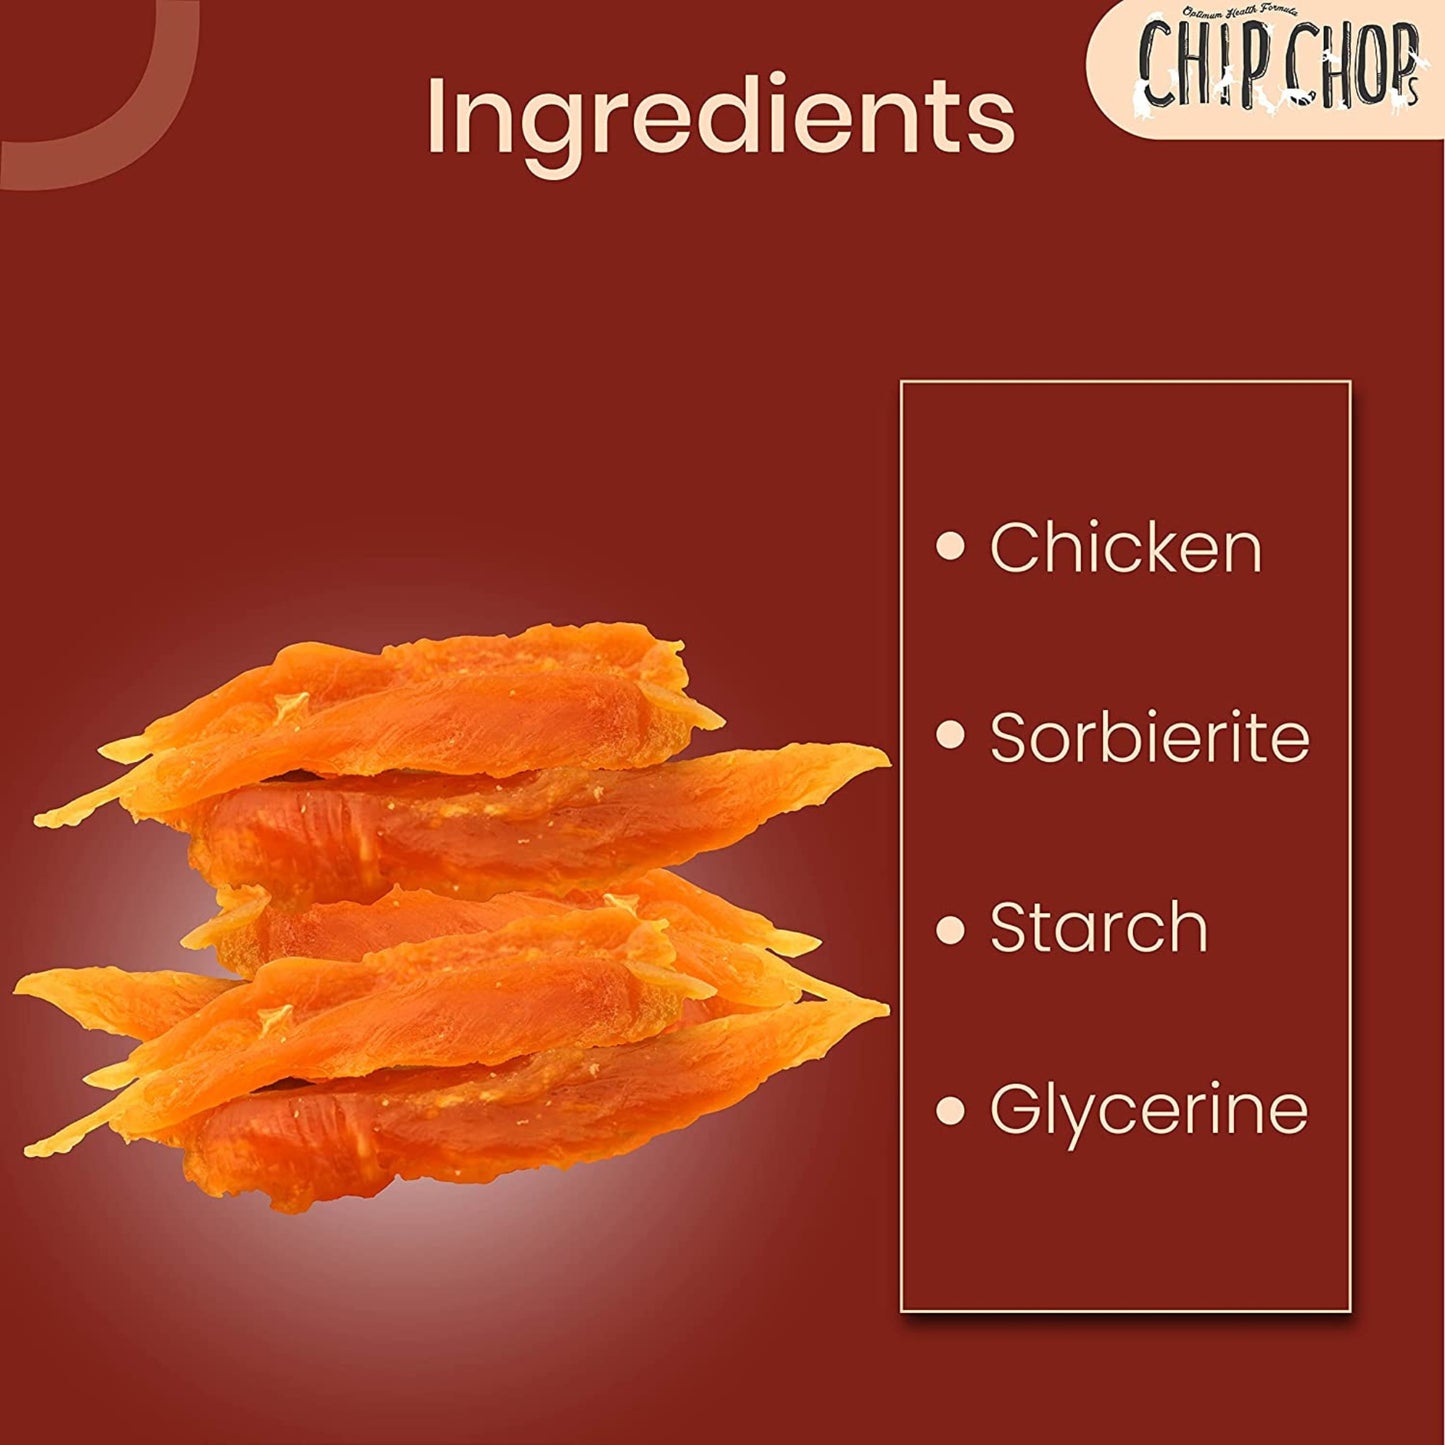 Chip Chops Dog Treats - Sun Dried Chicken Jerky (70gm)